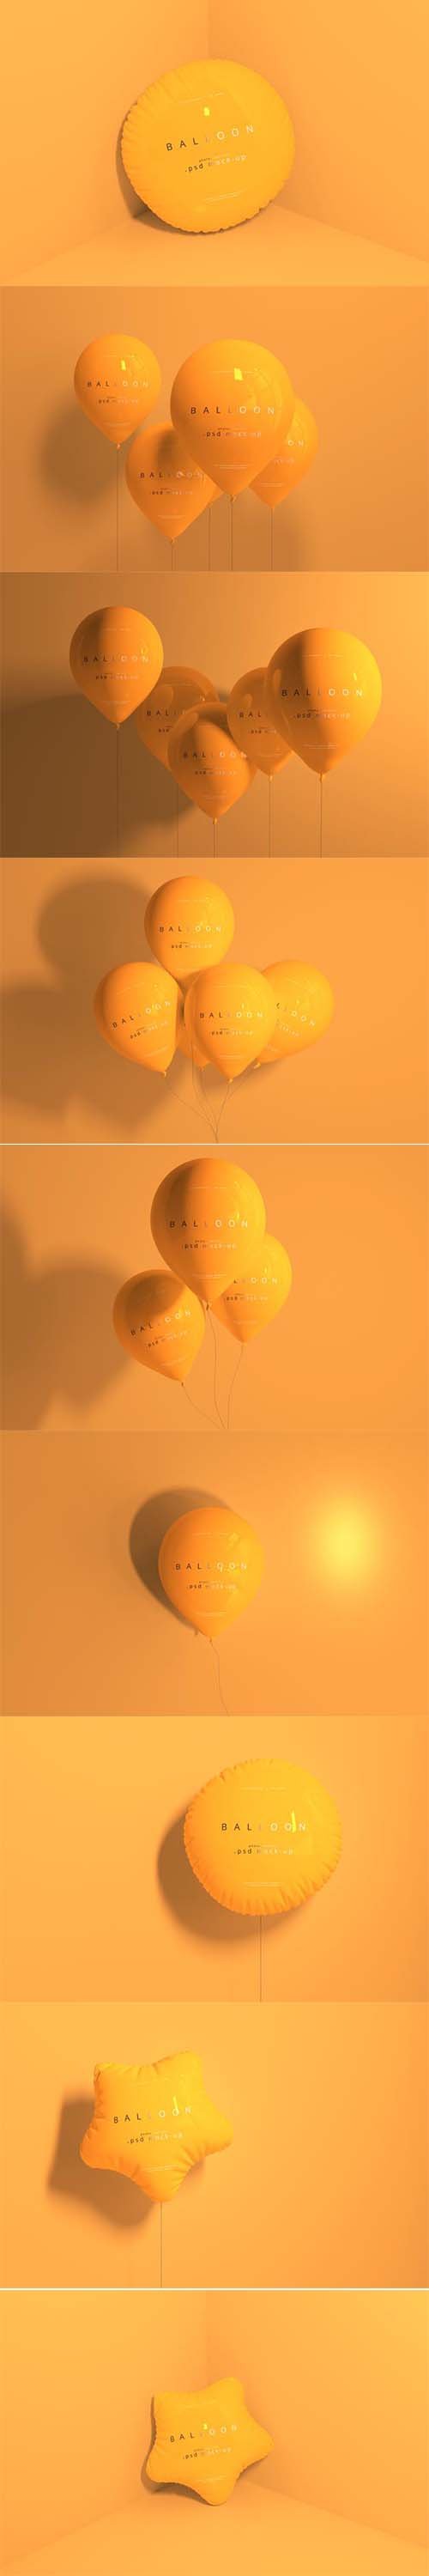 Orange balloon mockup